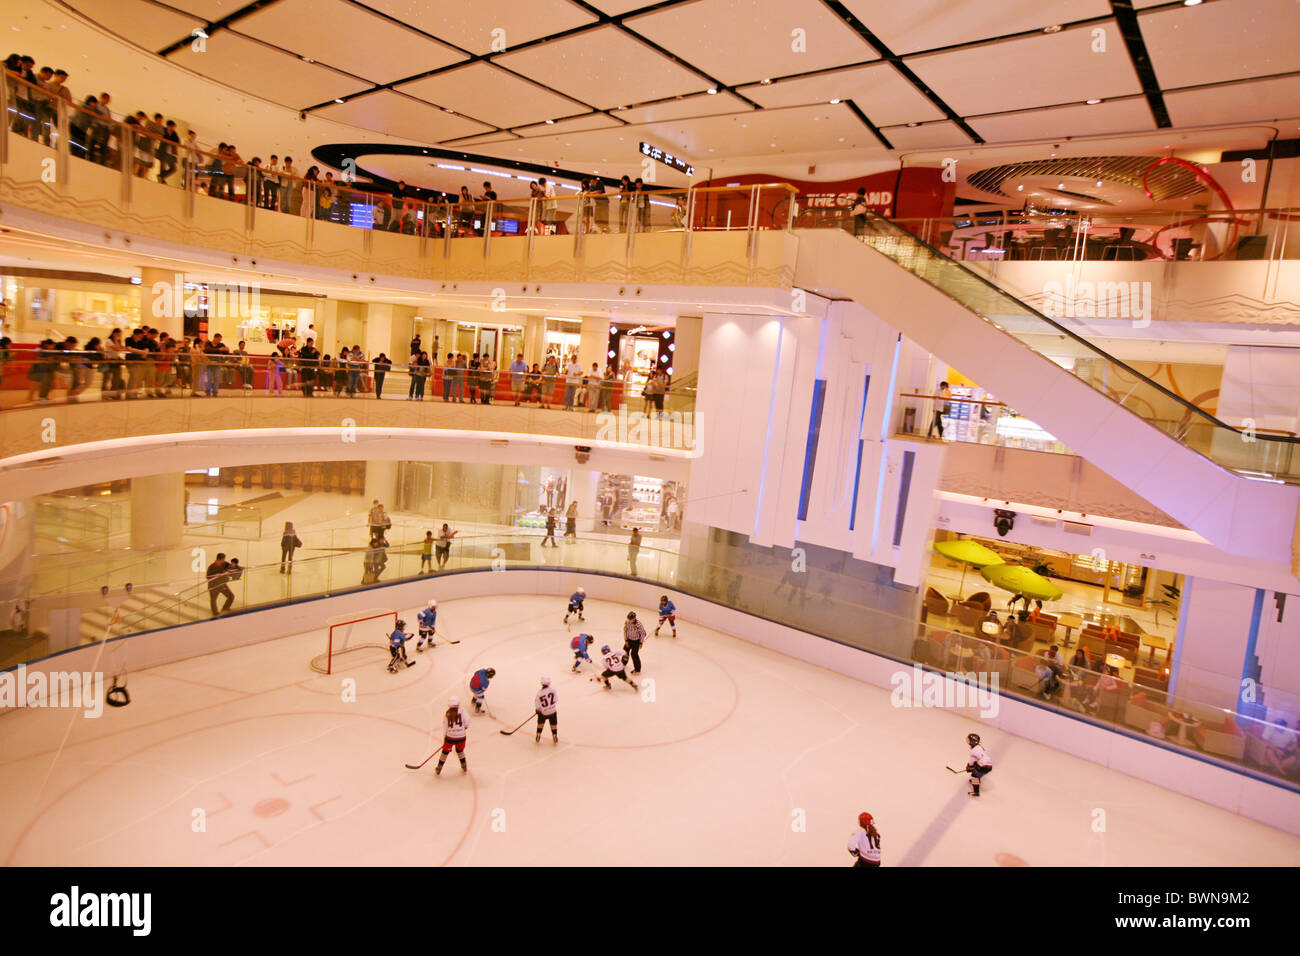 Asia China Hong Kong Kowloon elementos shopping center de abril de 2008 tiendas tiendas de deportes hockey patinaje sobre hielo ind Foto de stock